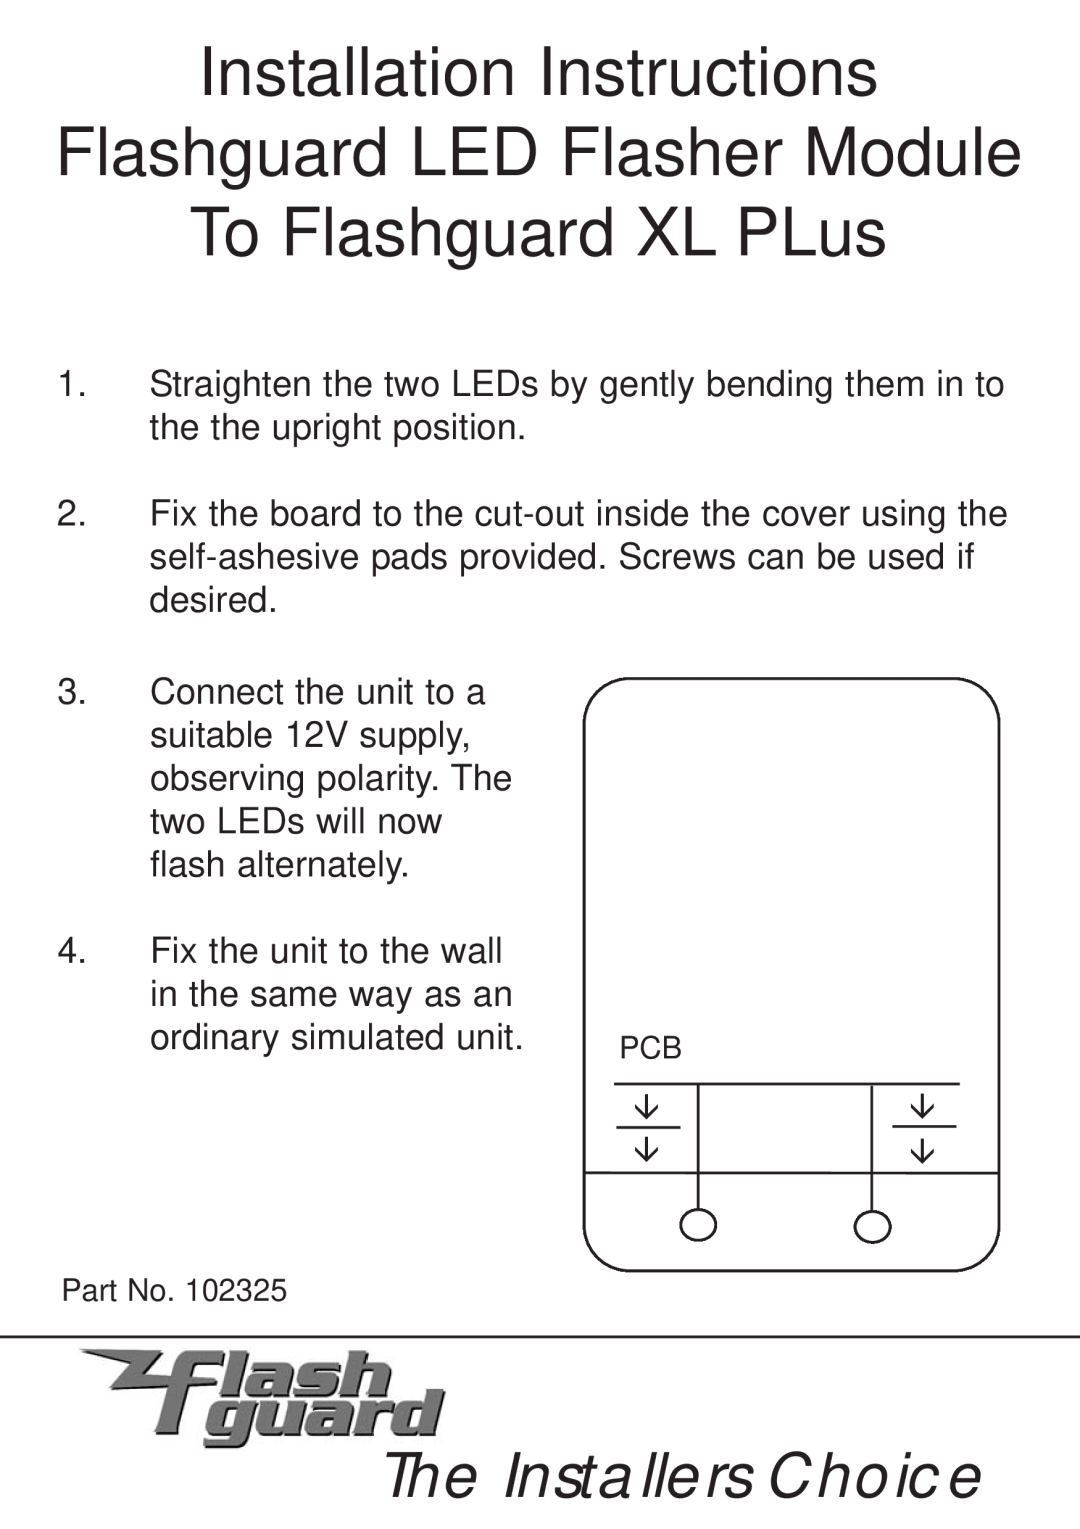 Klaxon 102325 To Flashguard XL PLus, Installation Instructions Flashguard LED Flasher Module, The Installers Choice 